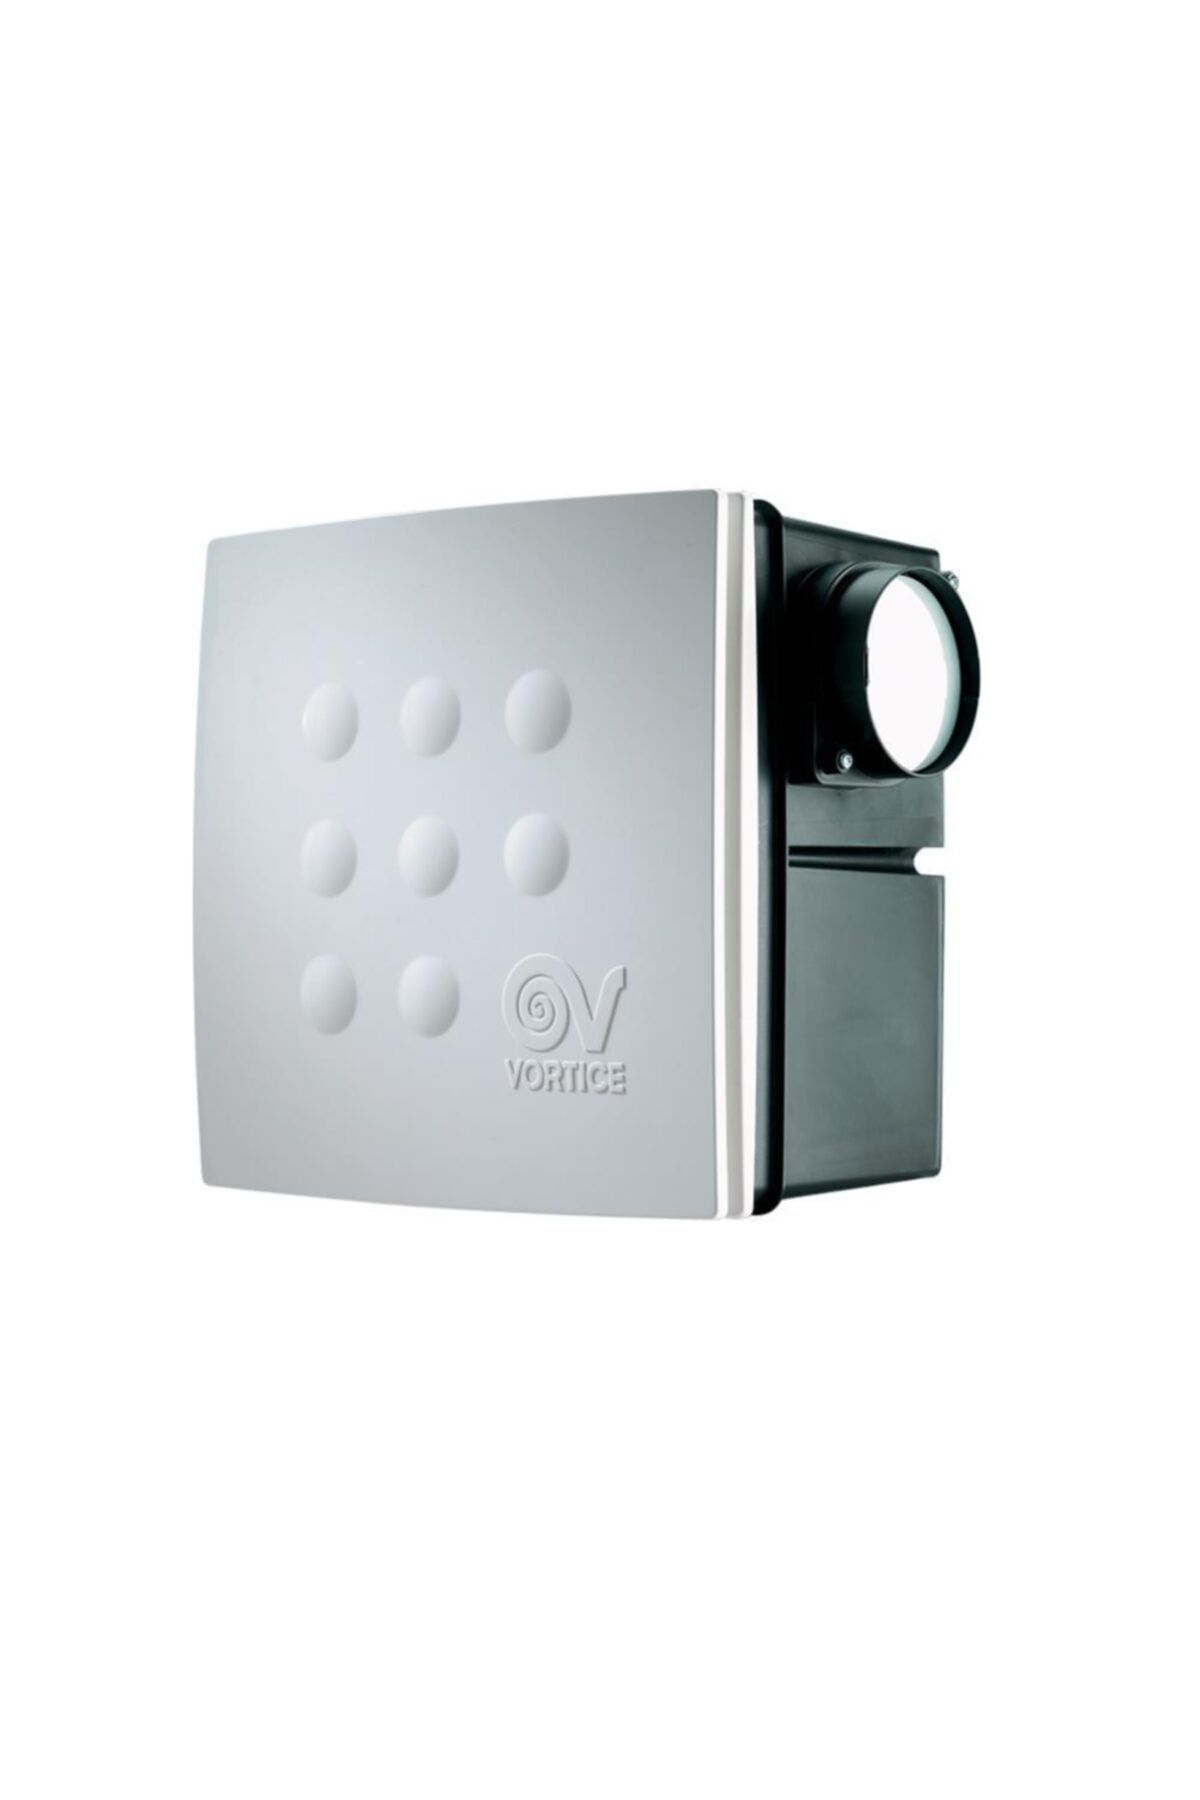 Vort Quadro I Micro 100 I C 1.5 Hız Anahtarı Tasarruflu Havalandırma Fanı Anahtar Yüksek Bas_1